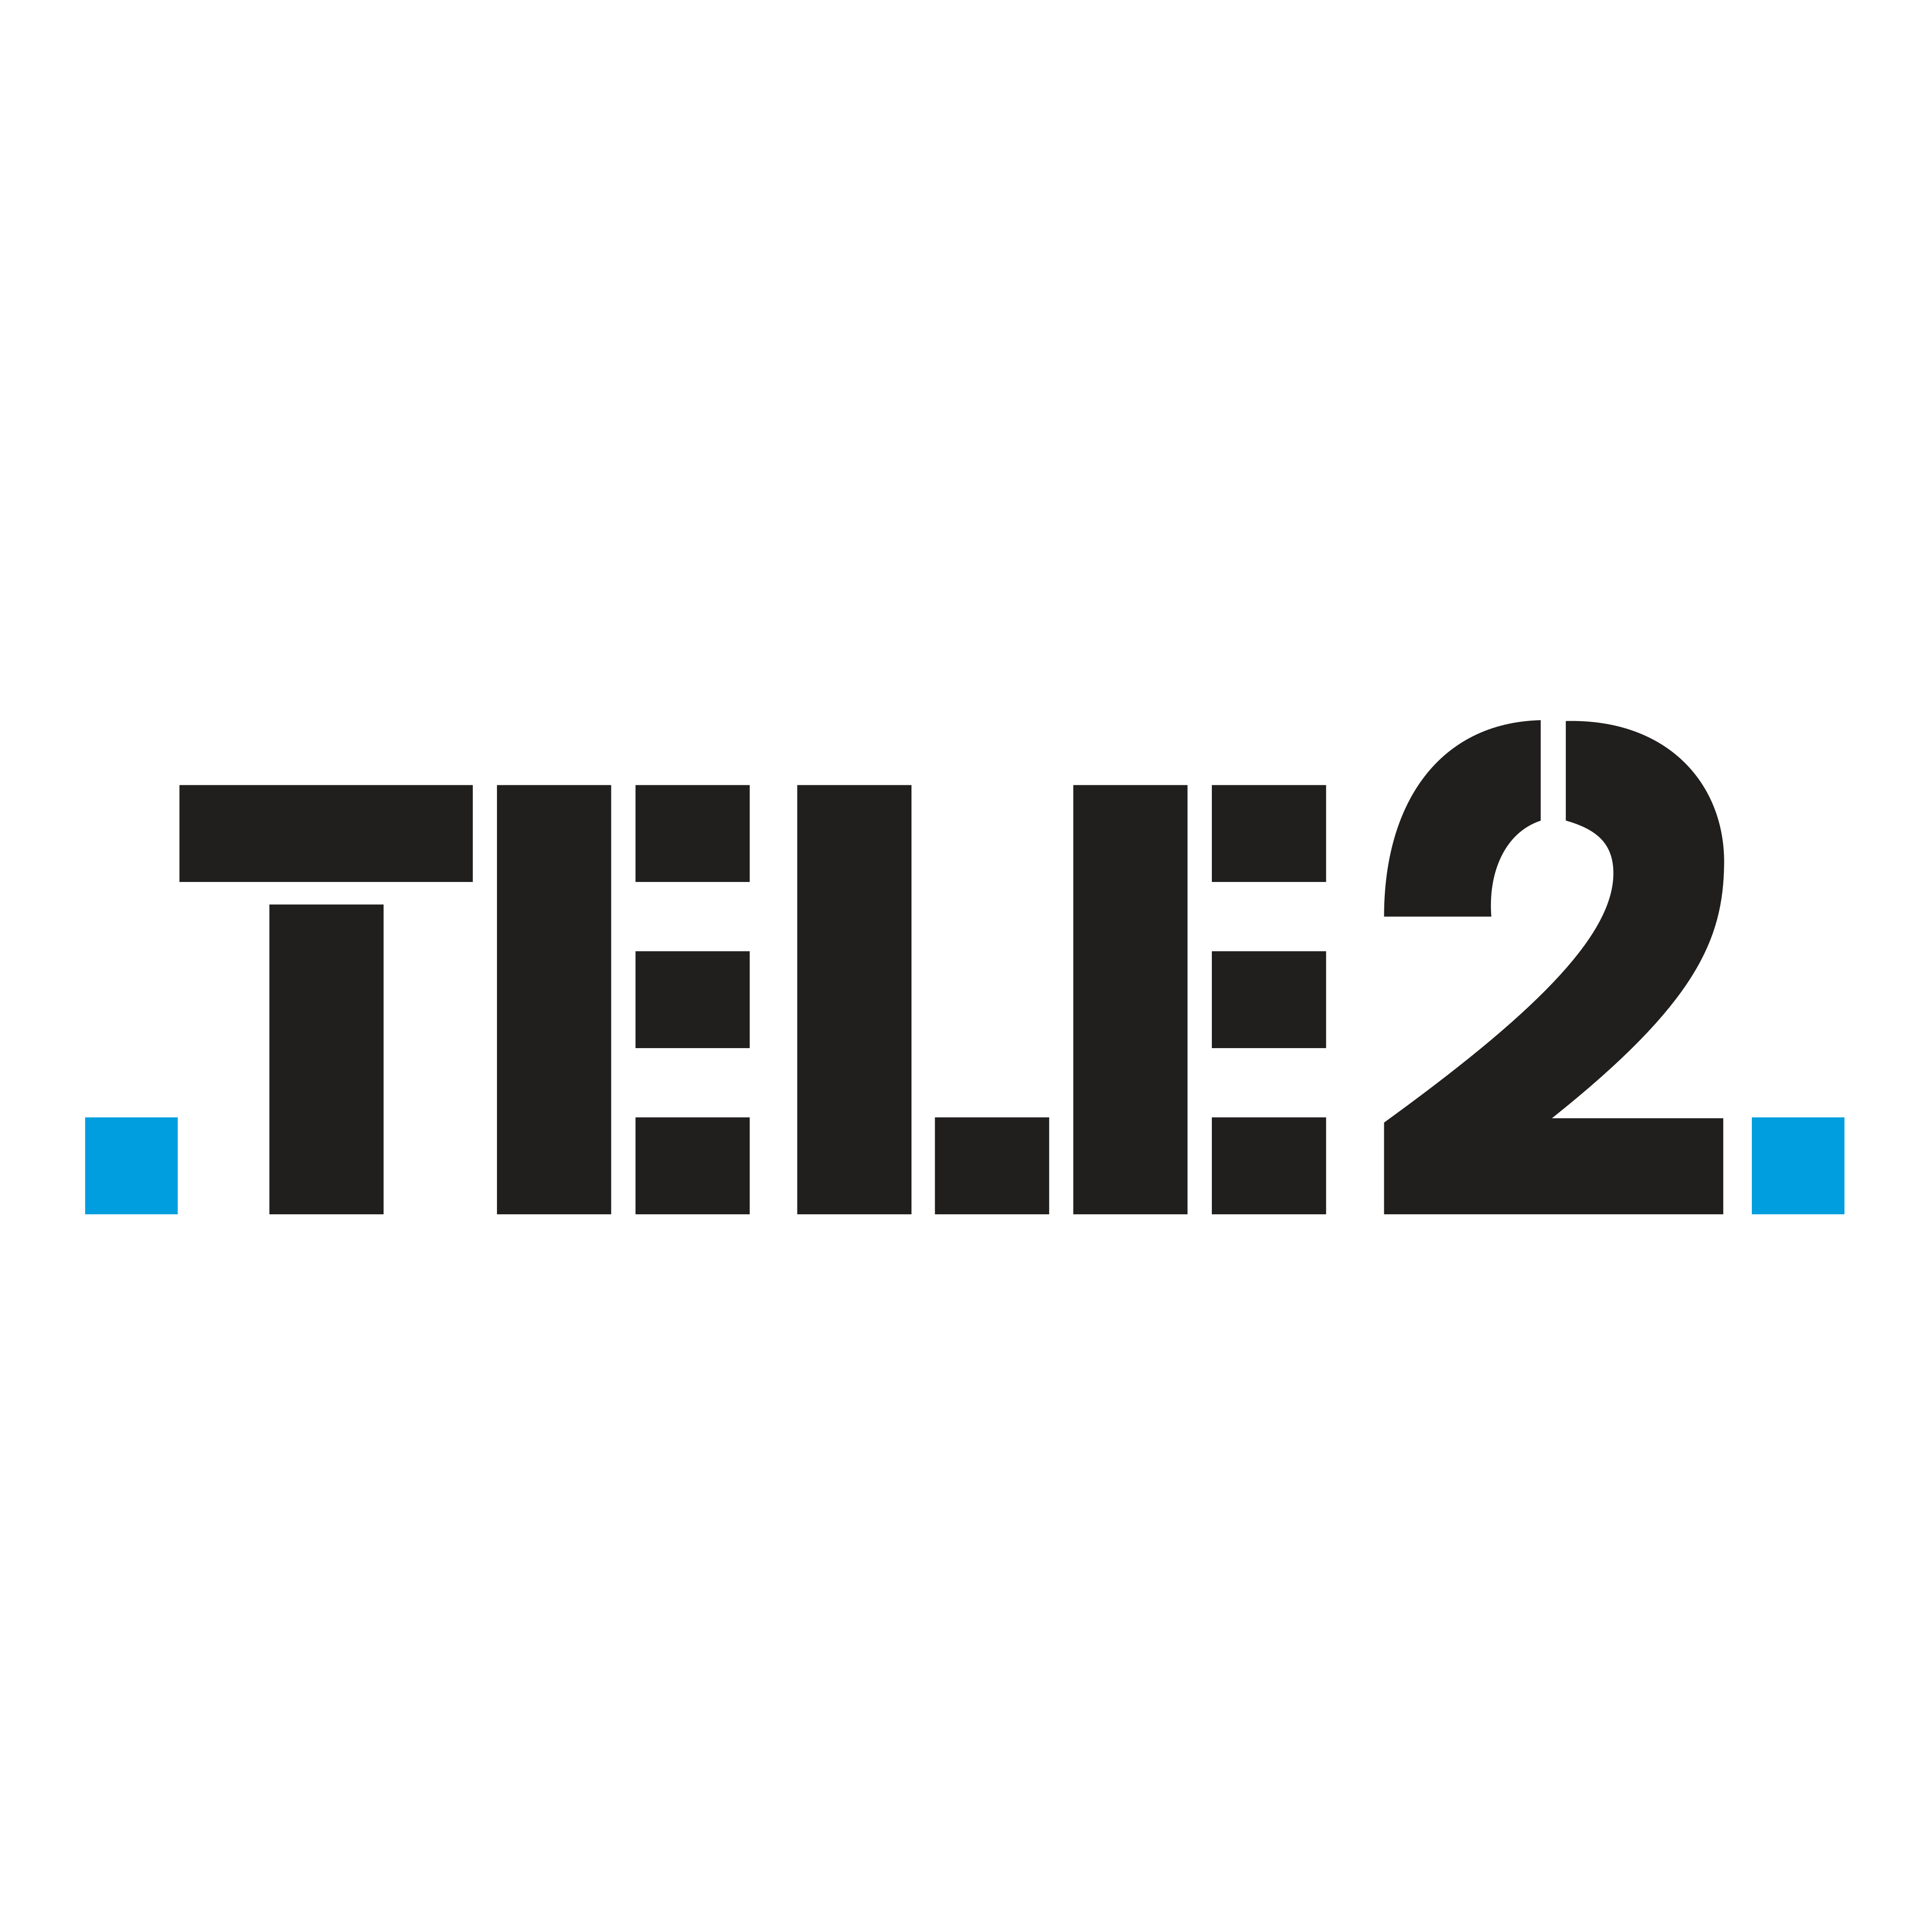 Теле тет. Фирменный знак теле2. Лого теле2 т2. Логотип оператора теле2.